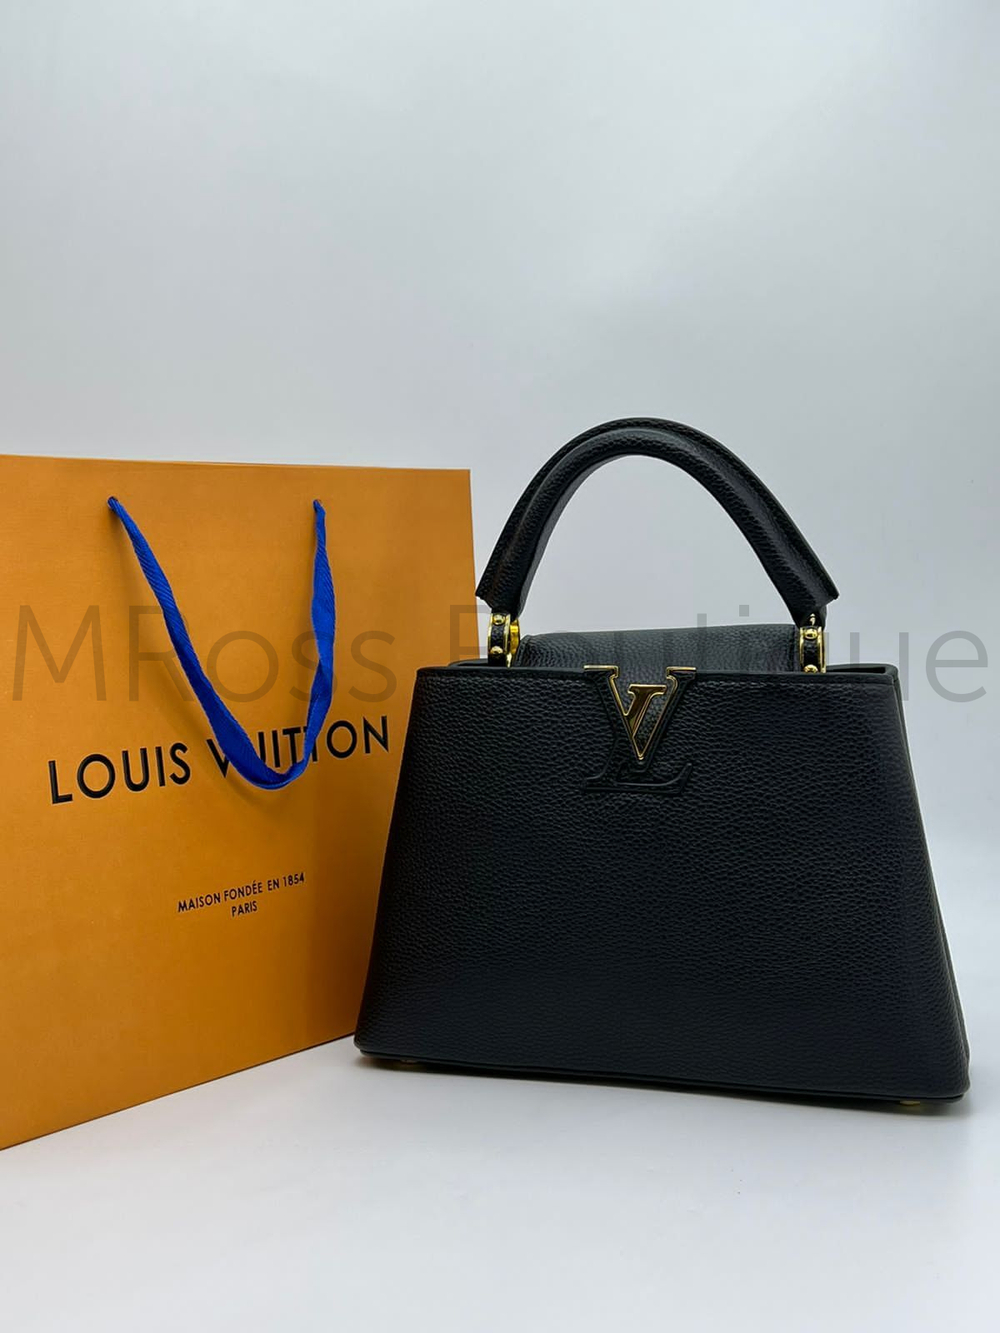 Женская сумка Louis Vuitton (Луи Виттон) люкс класса